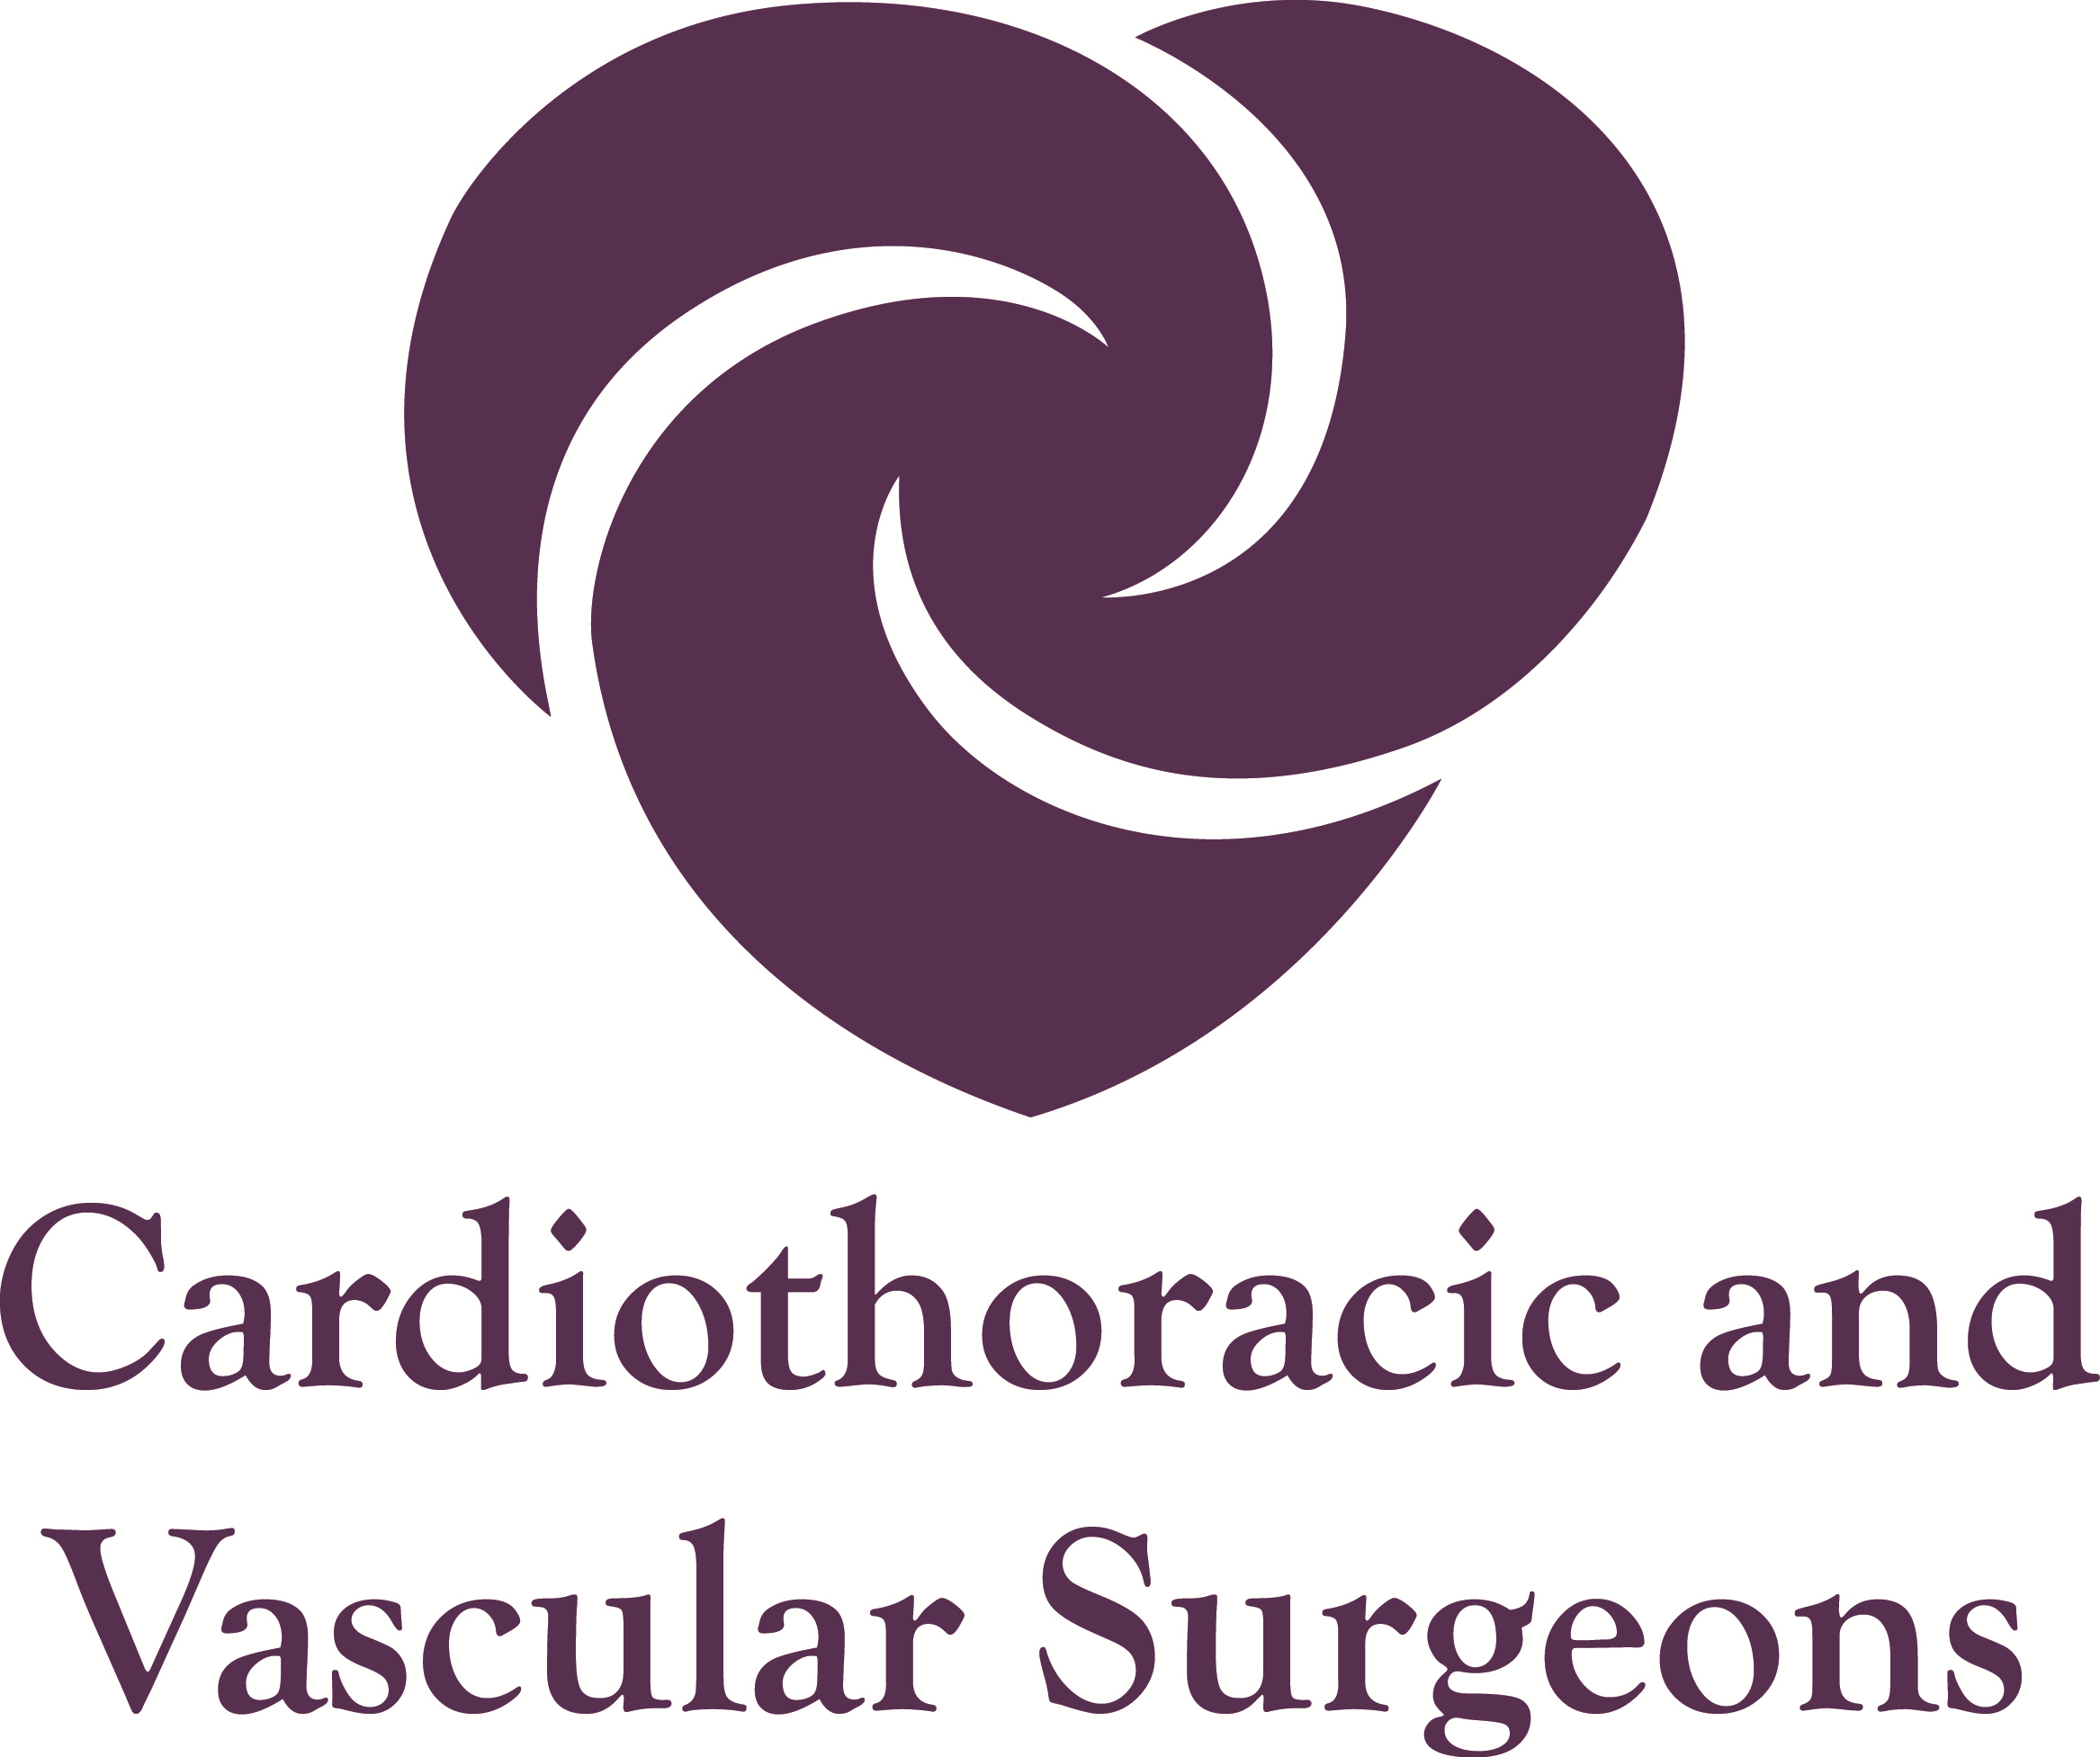 Cardiothoracic and Vascular Surgeons logo